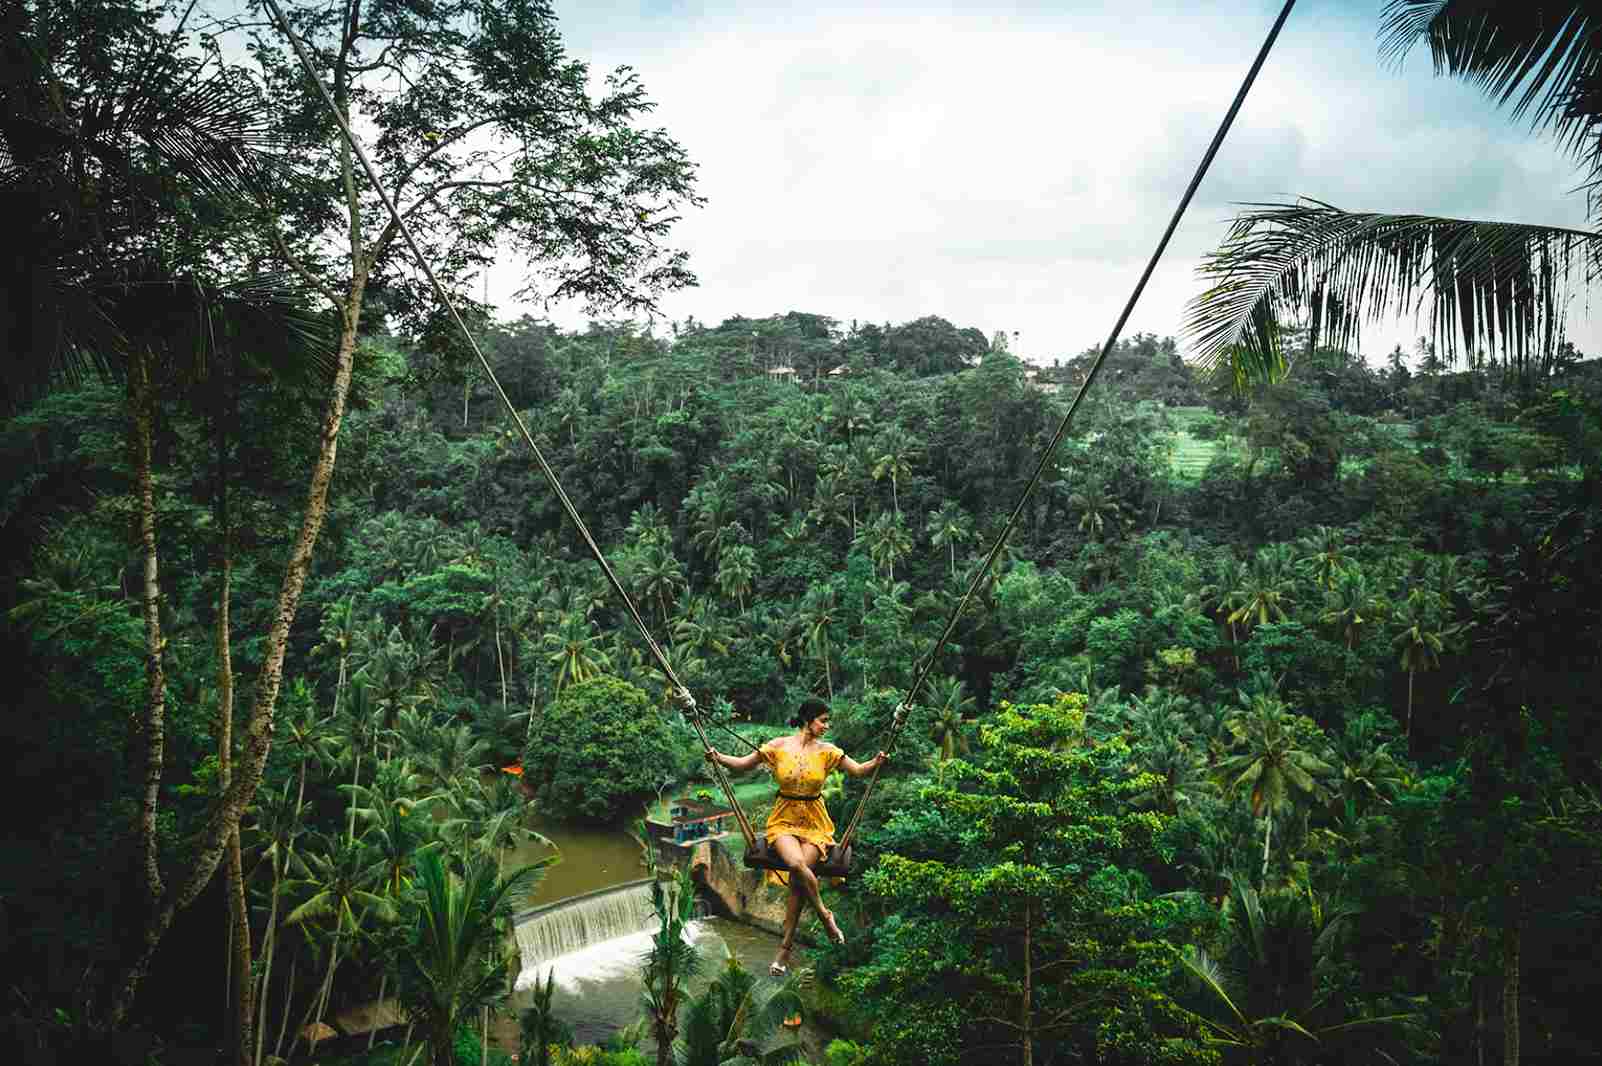 kerala adventure tourism guidelines